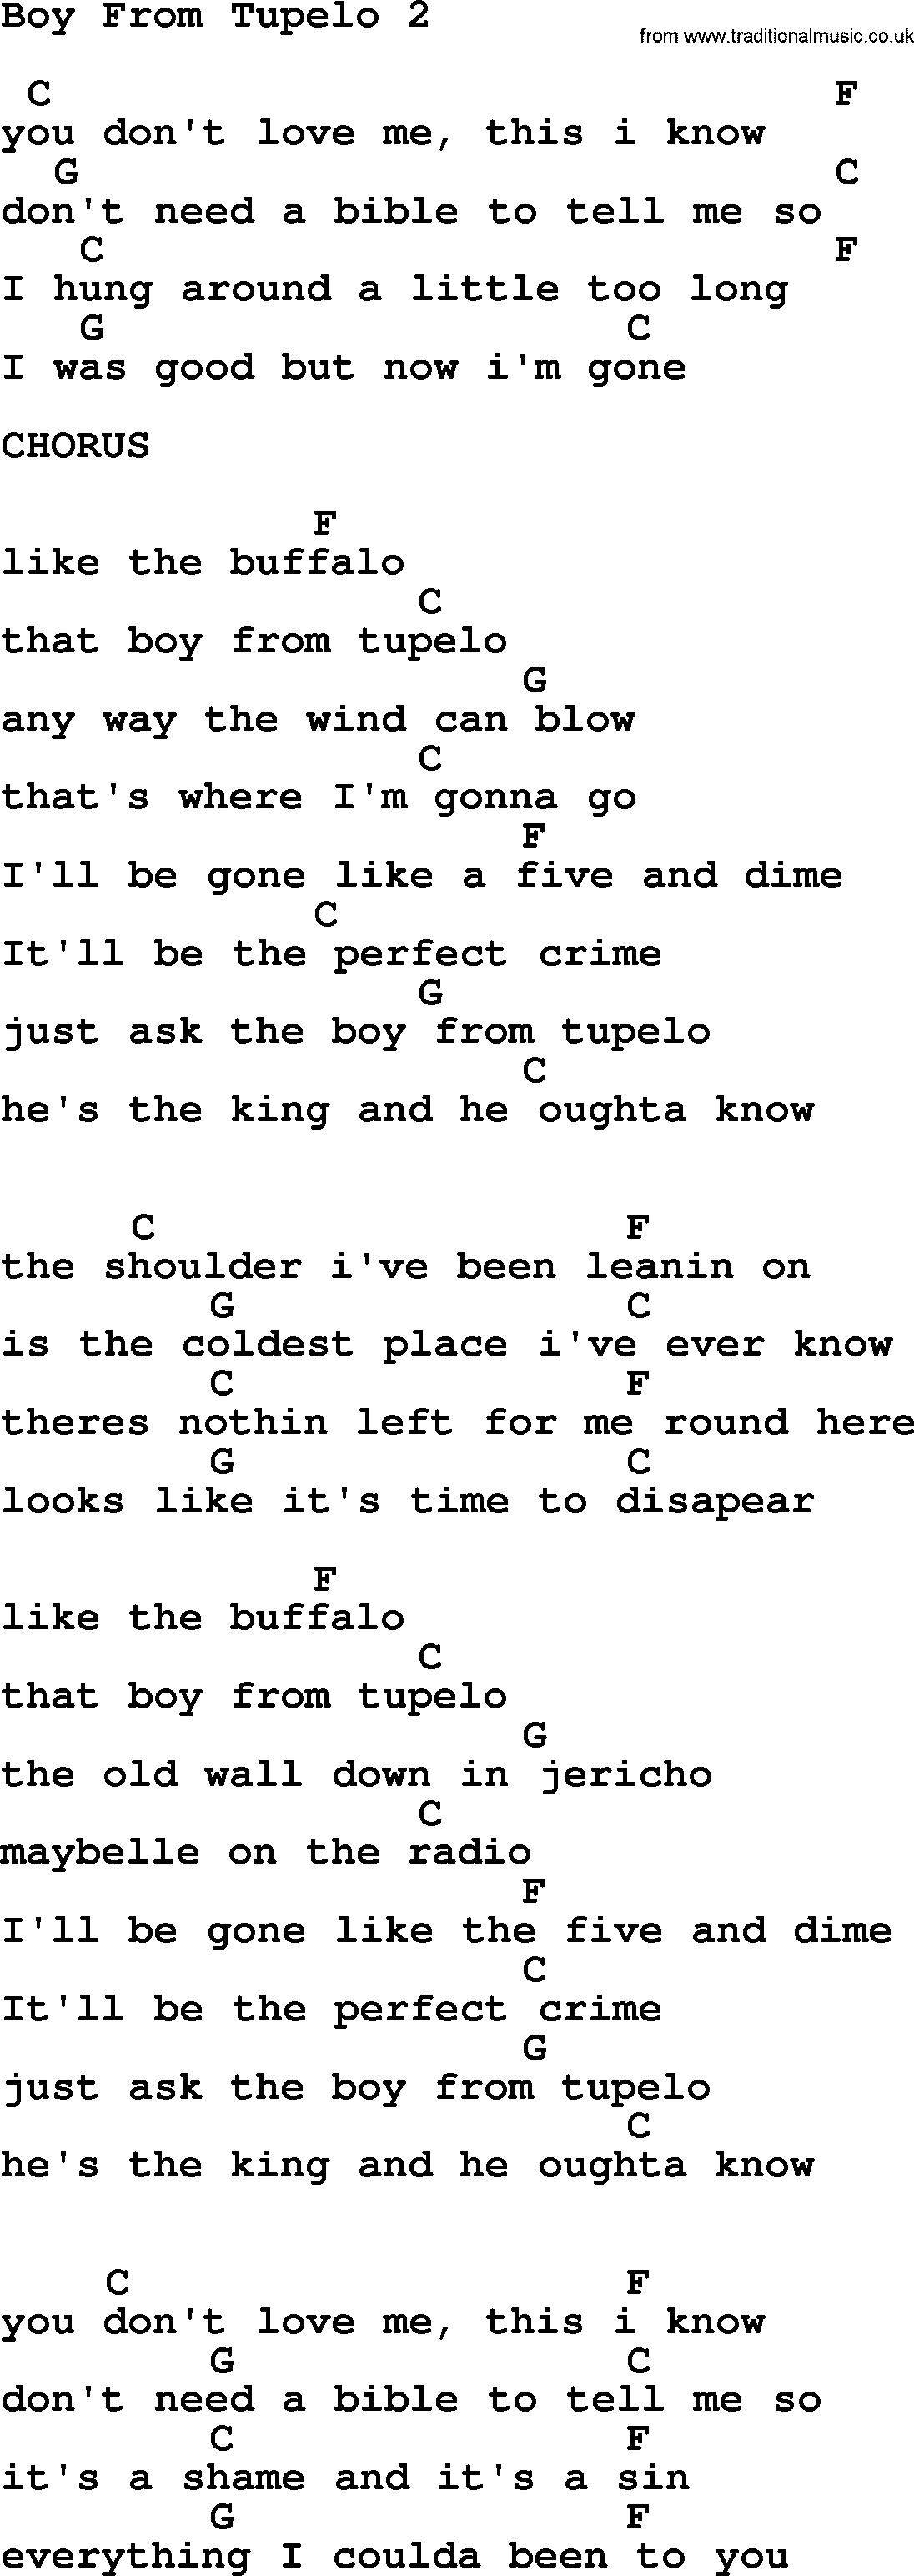 Emmylou Harris song: Boy From Tupelo 2 lyrics and chords